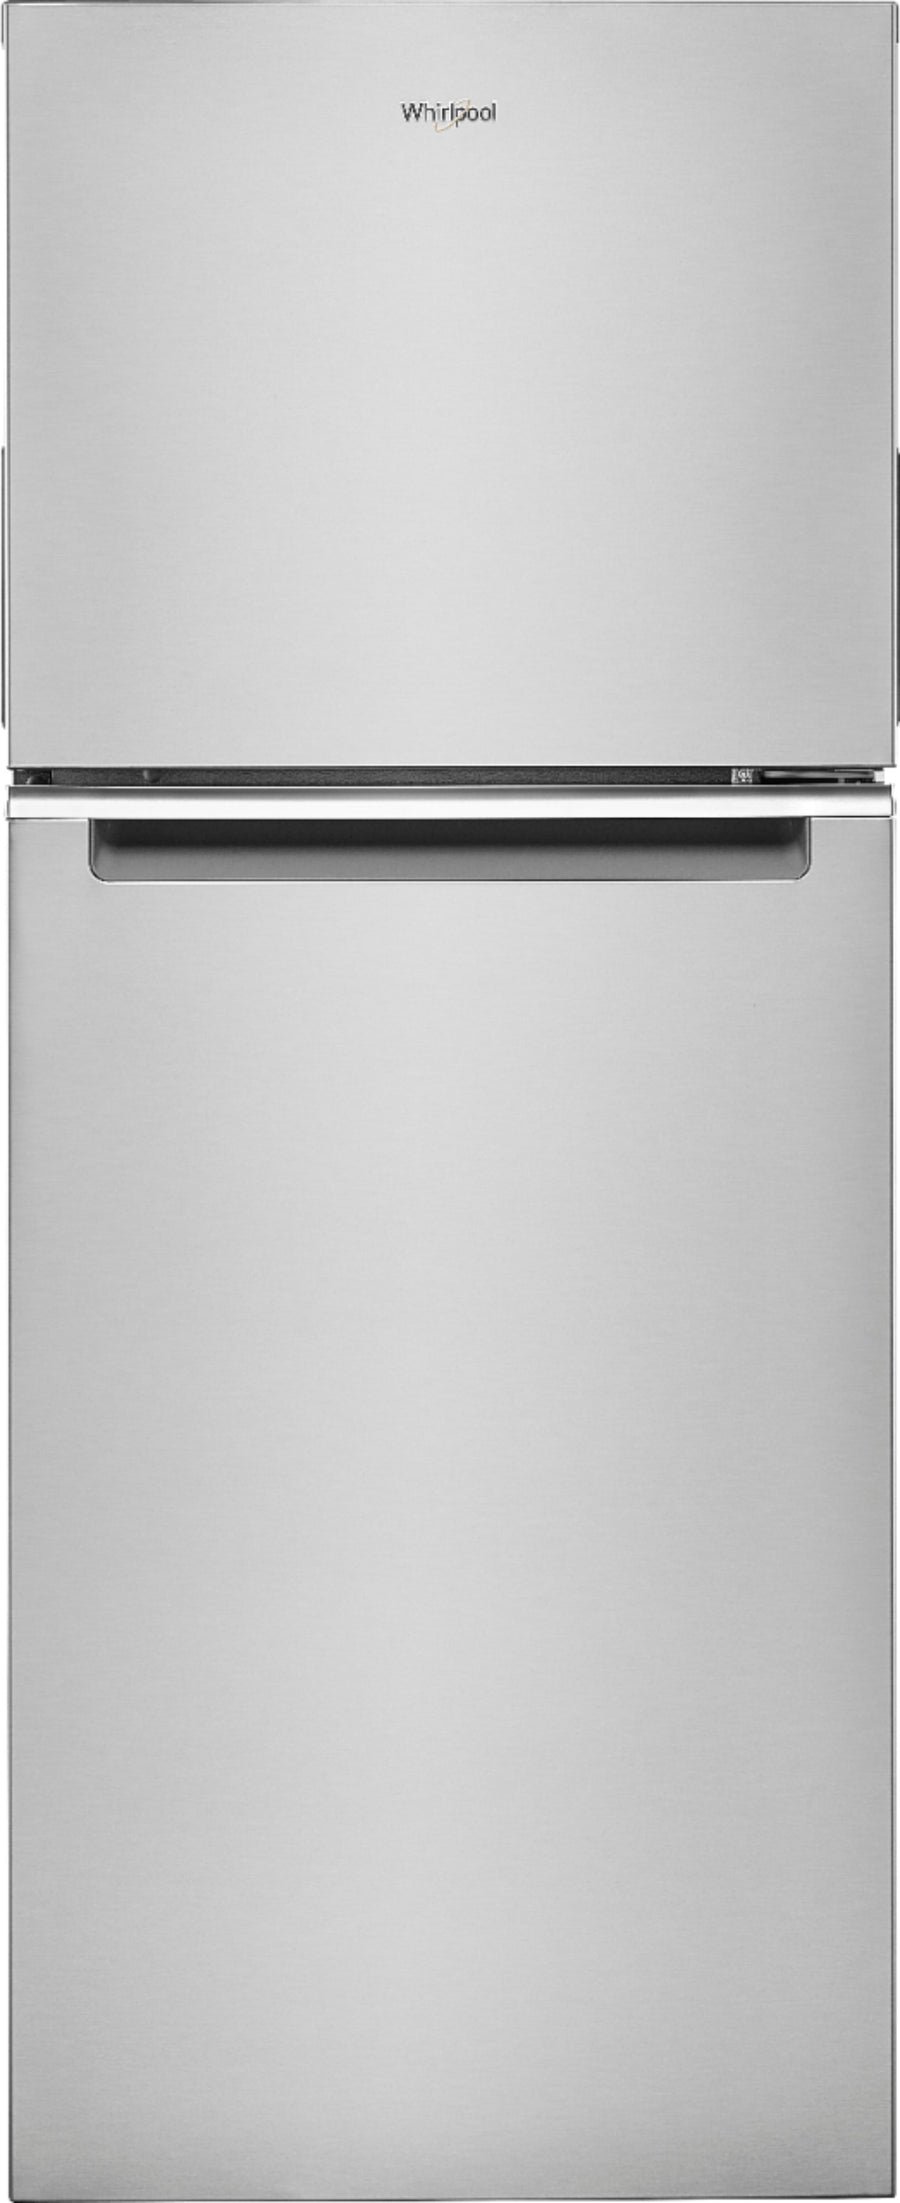 Whirlpool - 11.6 Cu. Ft. Top-Freezer Counter-Depth Refrigerator - Stainless steel_0